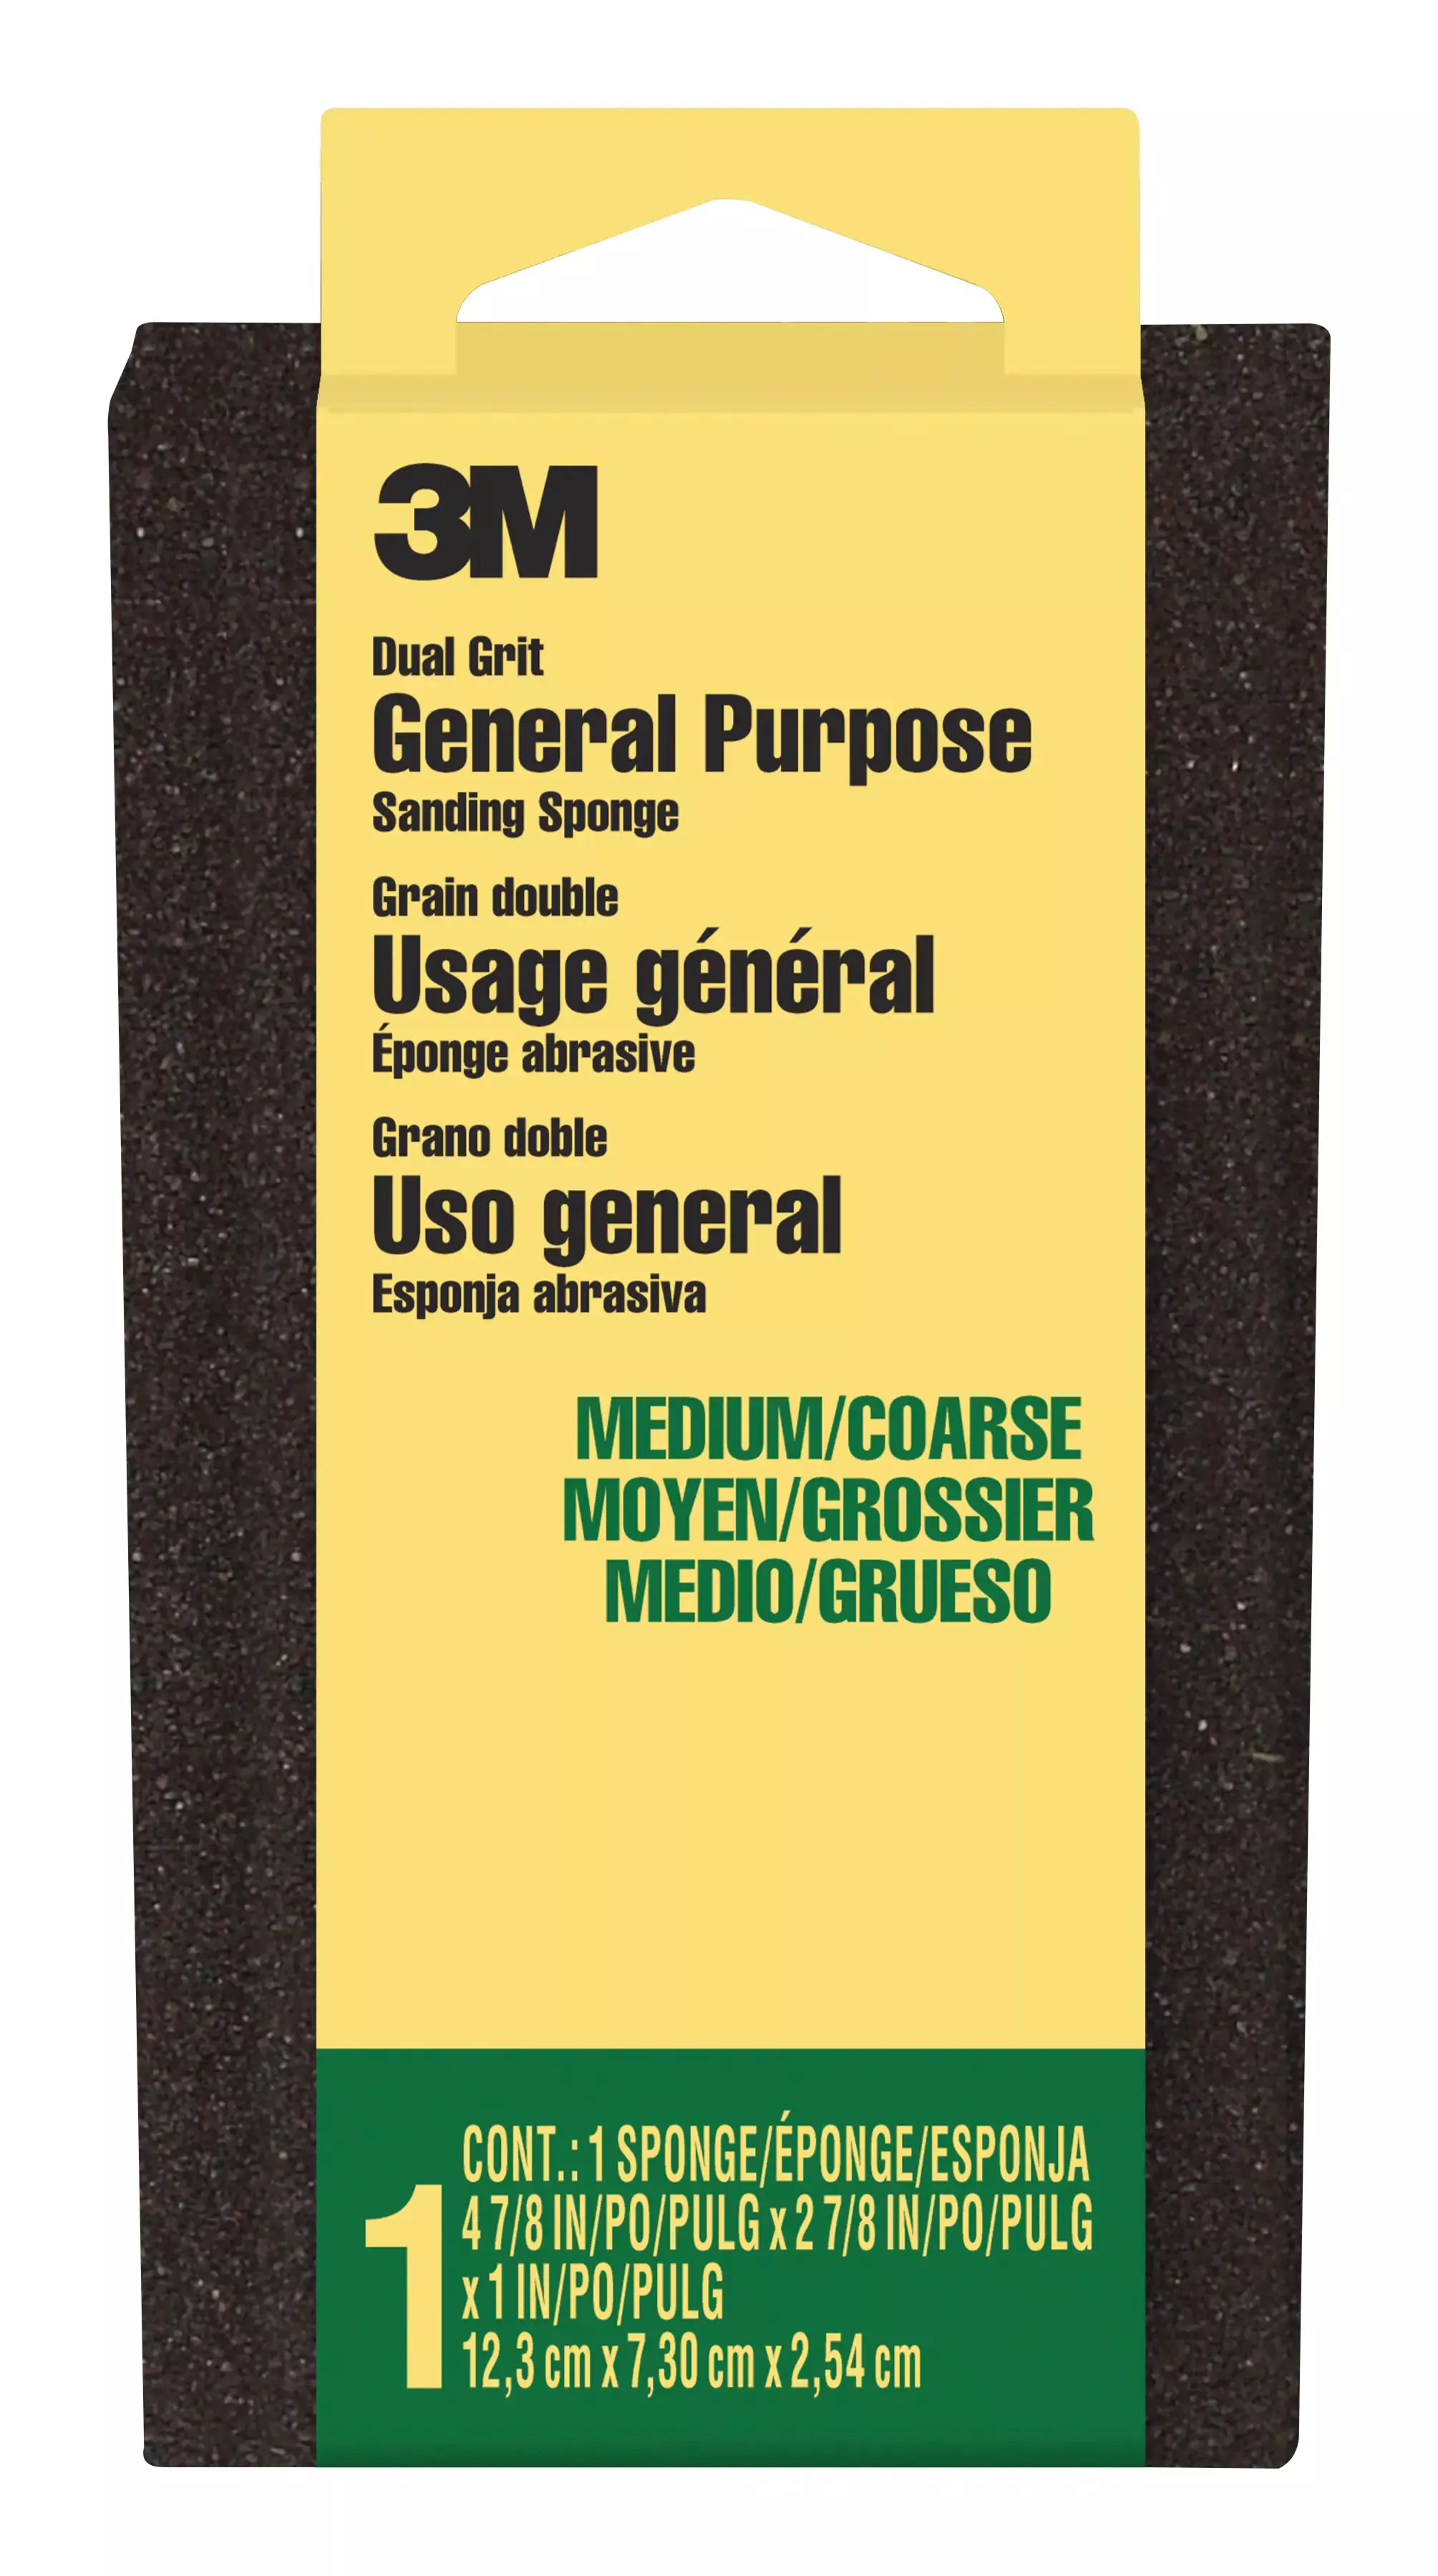 3M™ General Purpose Sanding Sponge DSMC-ESF-10, 2 7/8 in x 4 7/8 in x 1 in, Dual Grit, Medium/Coarse, 10 ea/cs